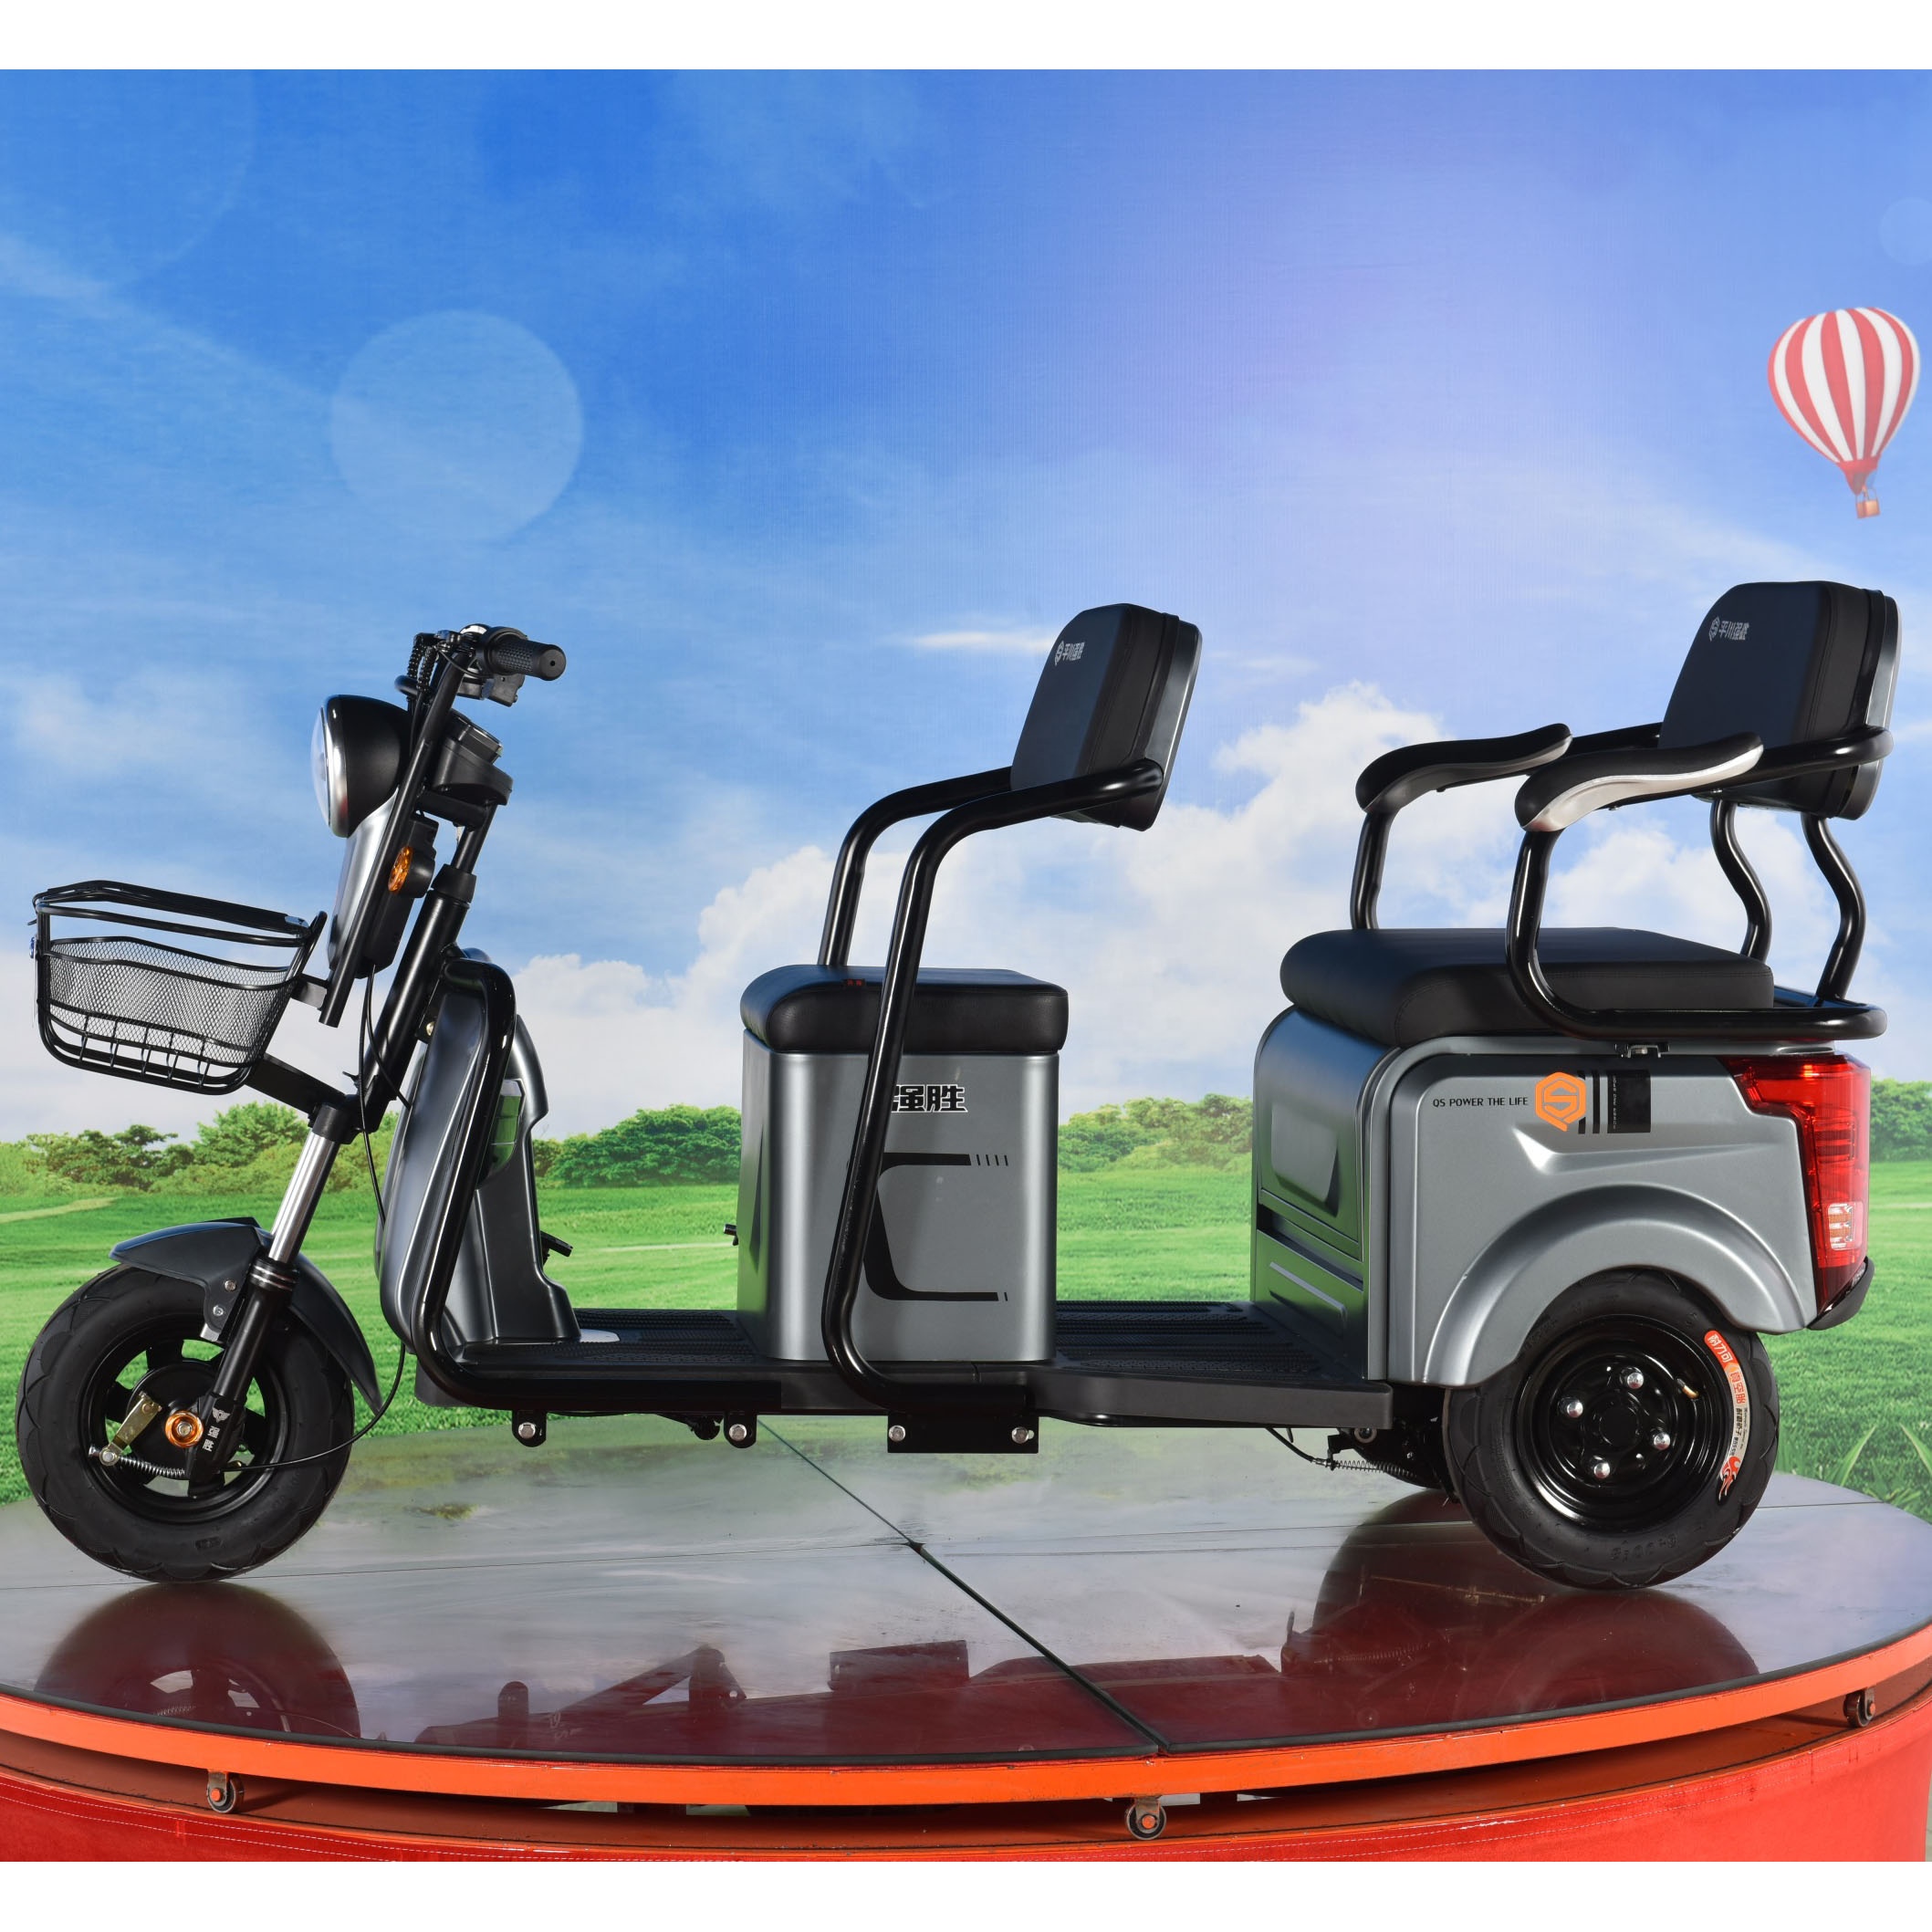 China Wholesale E Rickshaw Passenger/For Passenger Manufacturers - High quality small rickshaw tuk tuk 2 seater electric tricycle cheap price – Qiangsheng